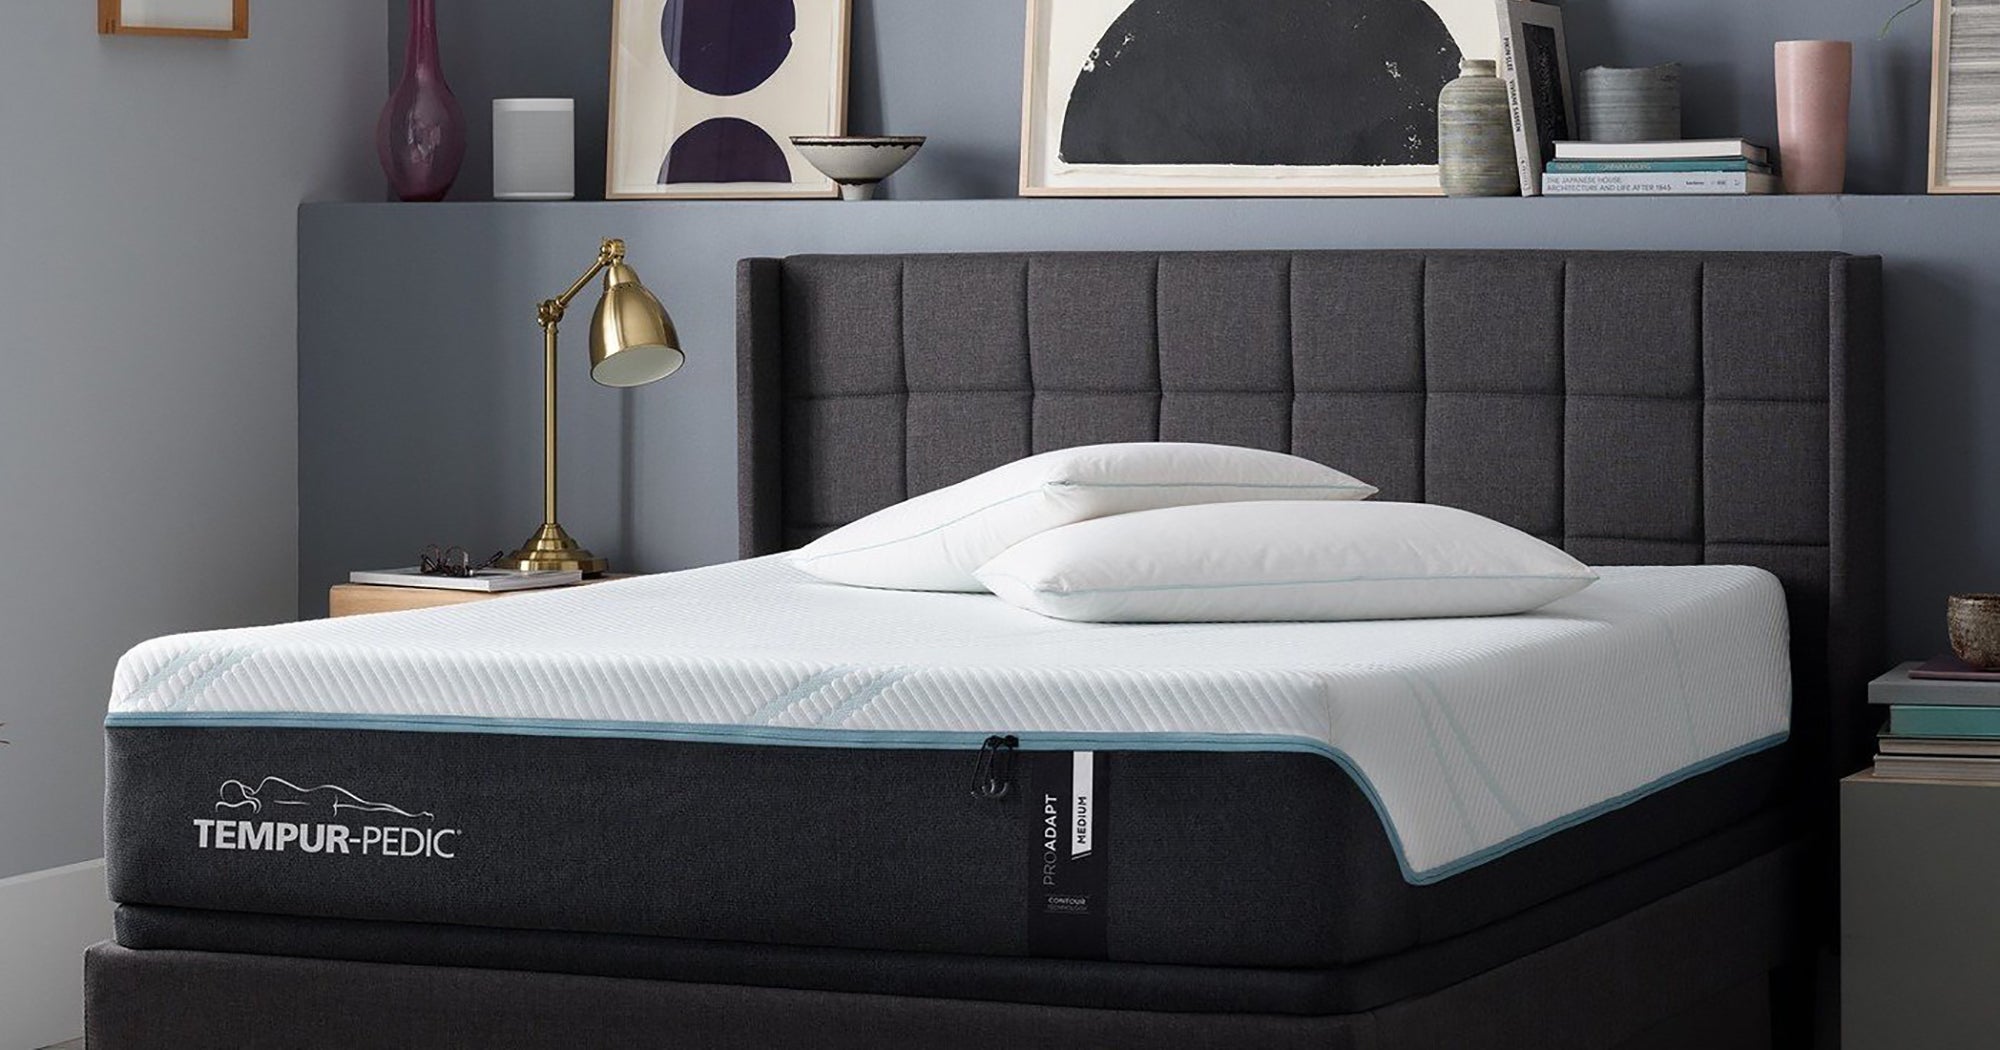 sova bed queen 10in memory foam mattress reviews